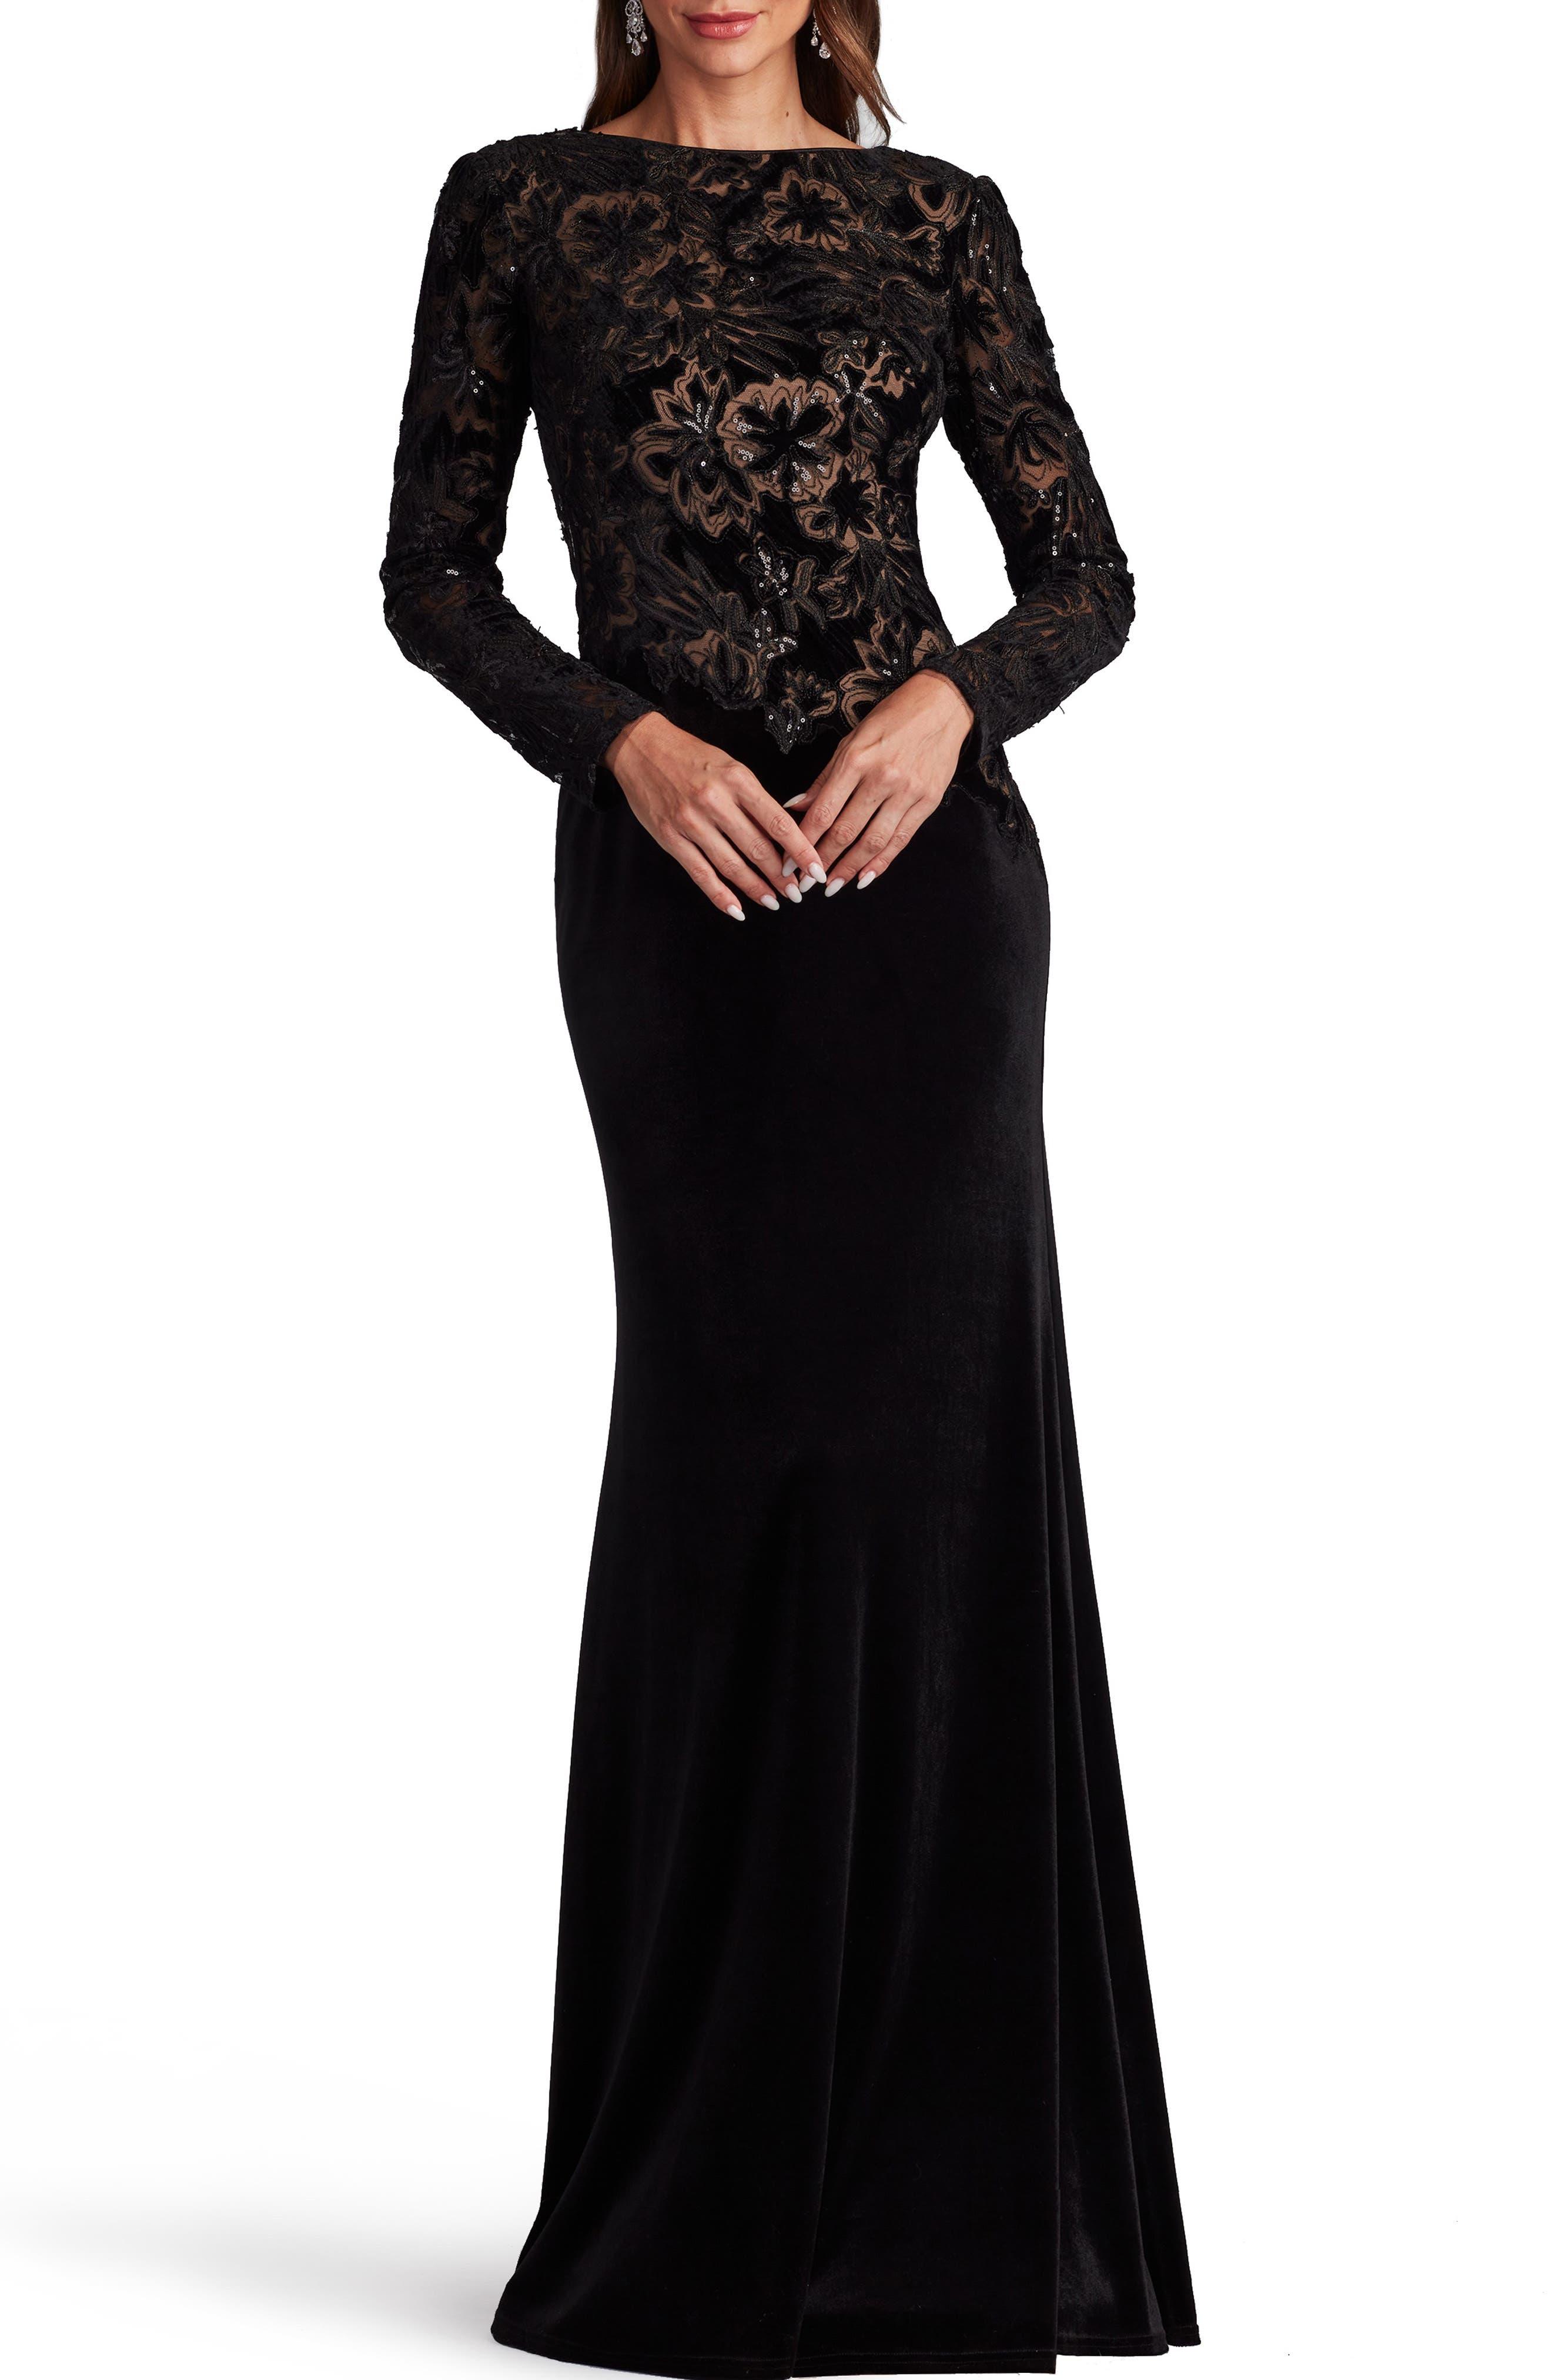 Black Petite Formal Dresses & Gowns | Dilllard's